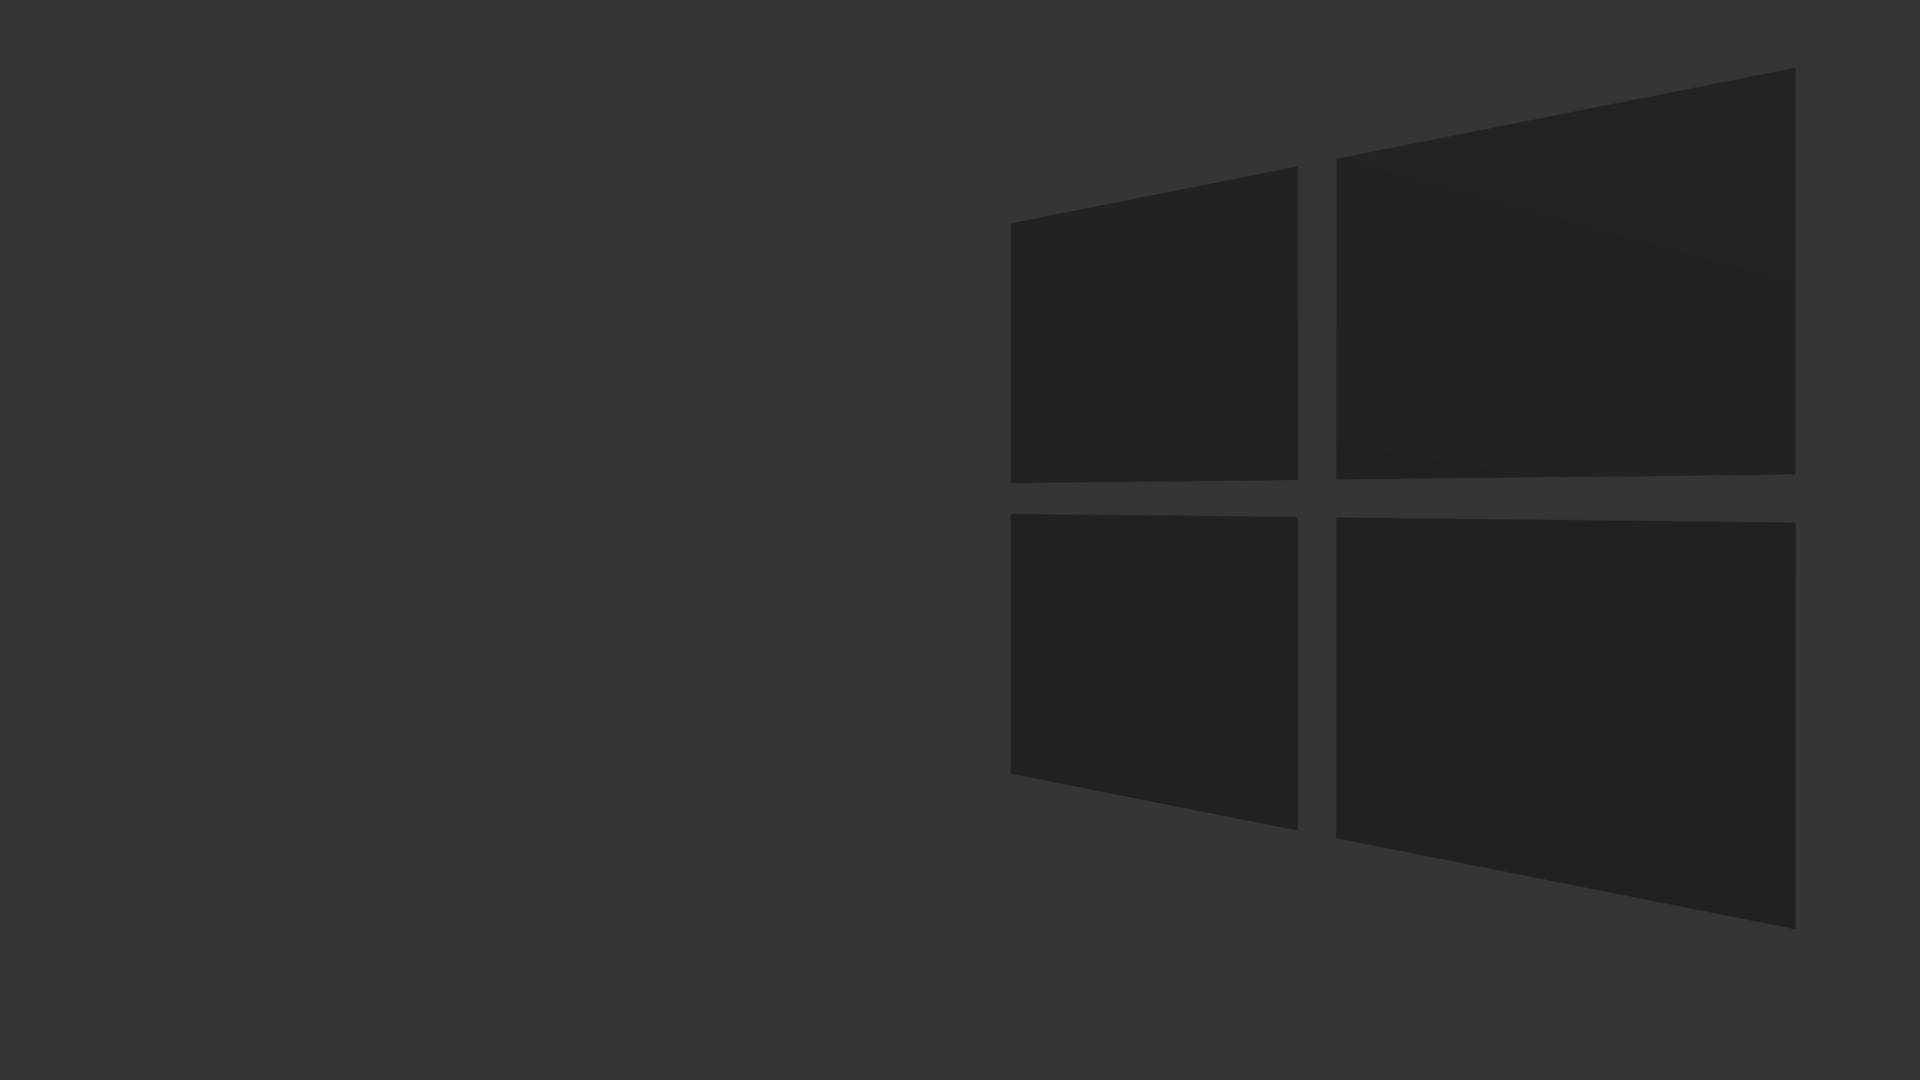 Windows Logo Windows10 Dark Hd Wallpaper Wallpaper Flare